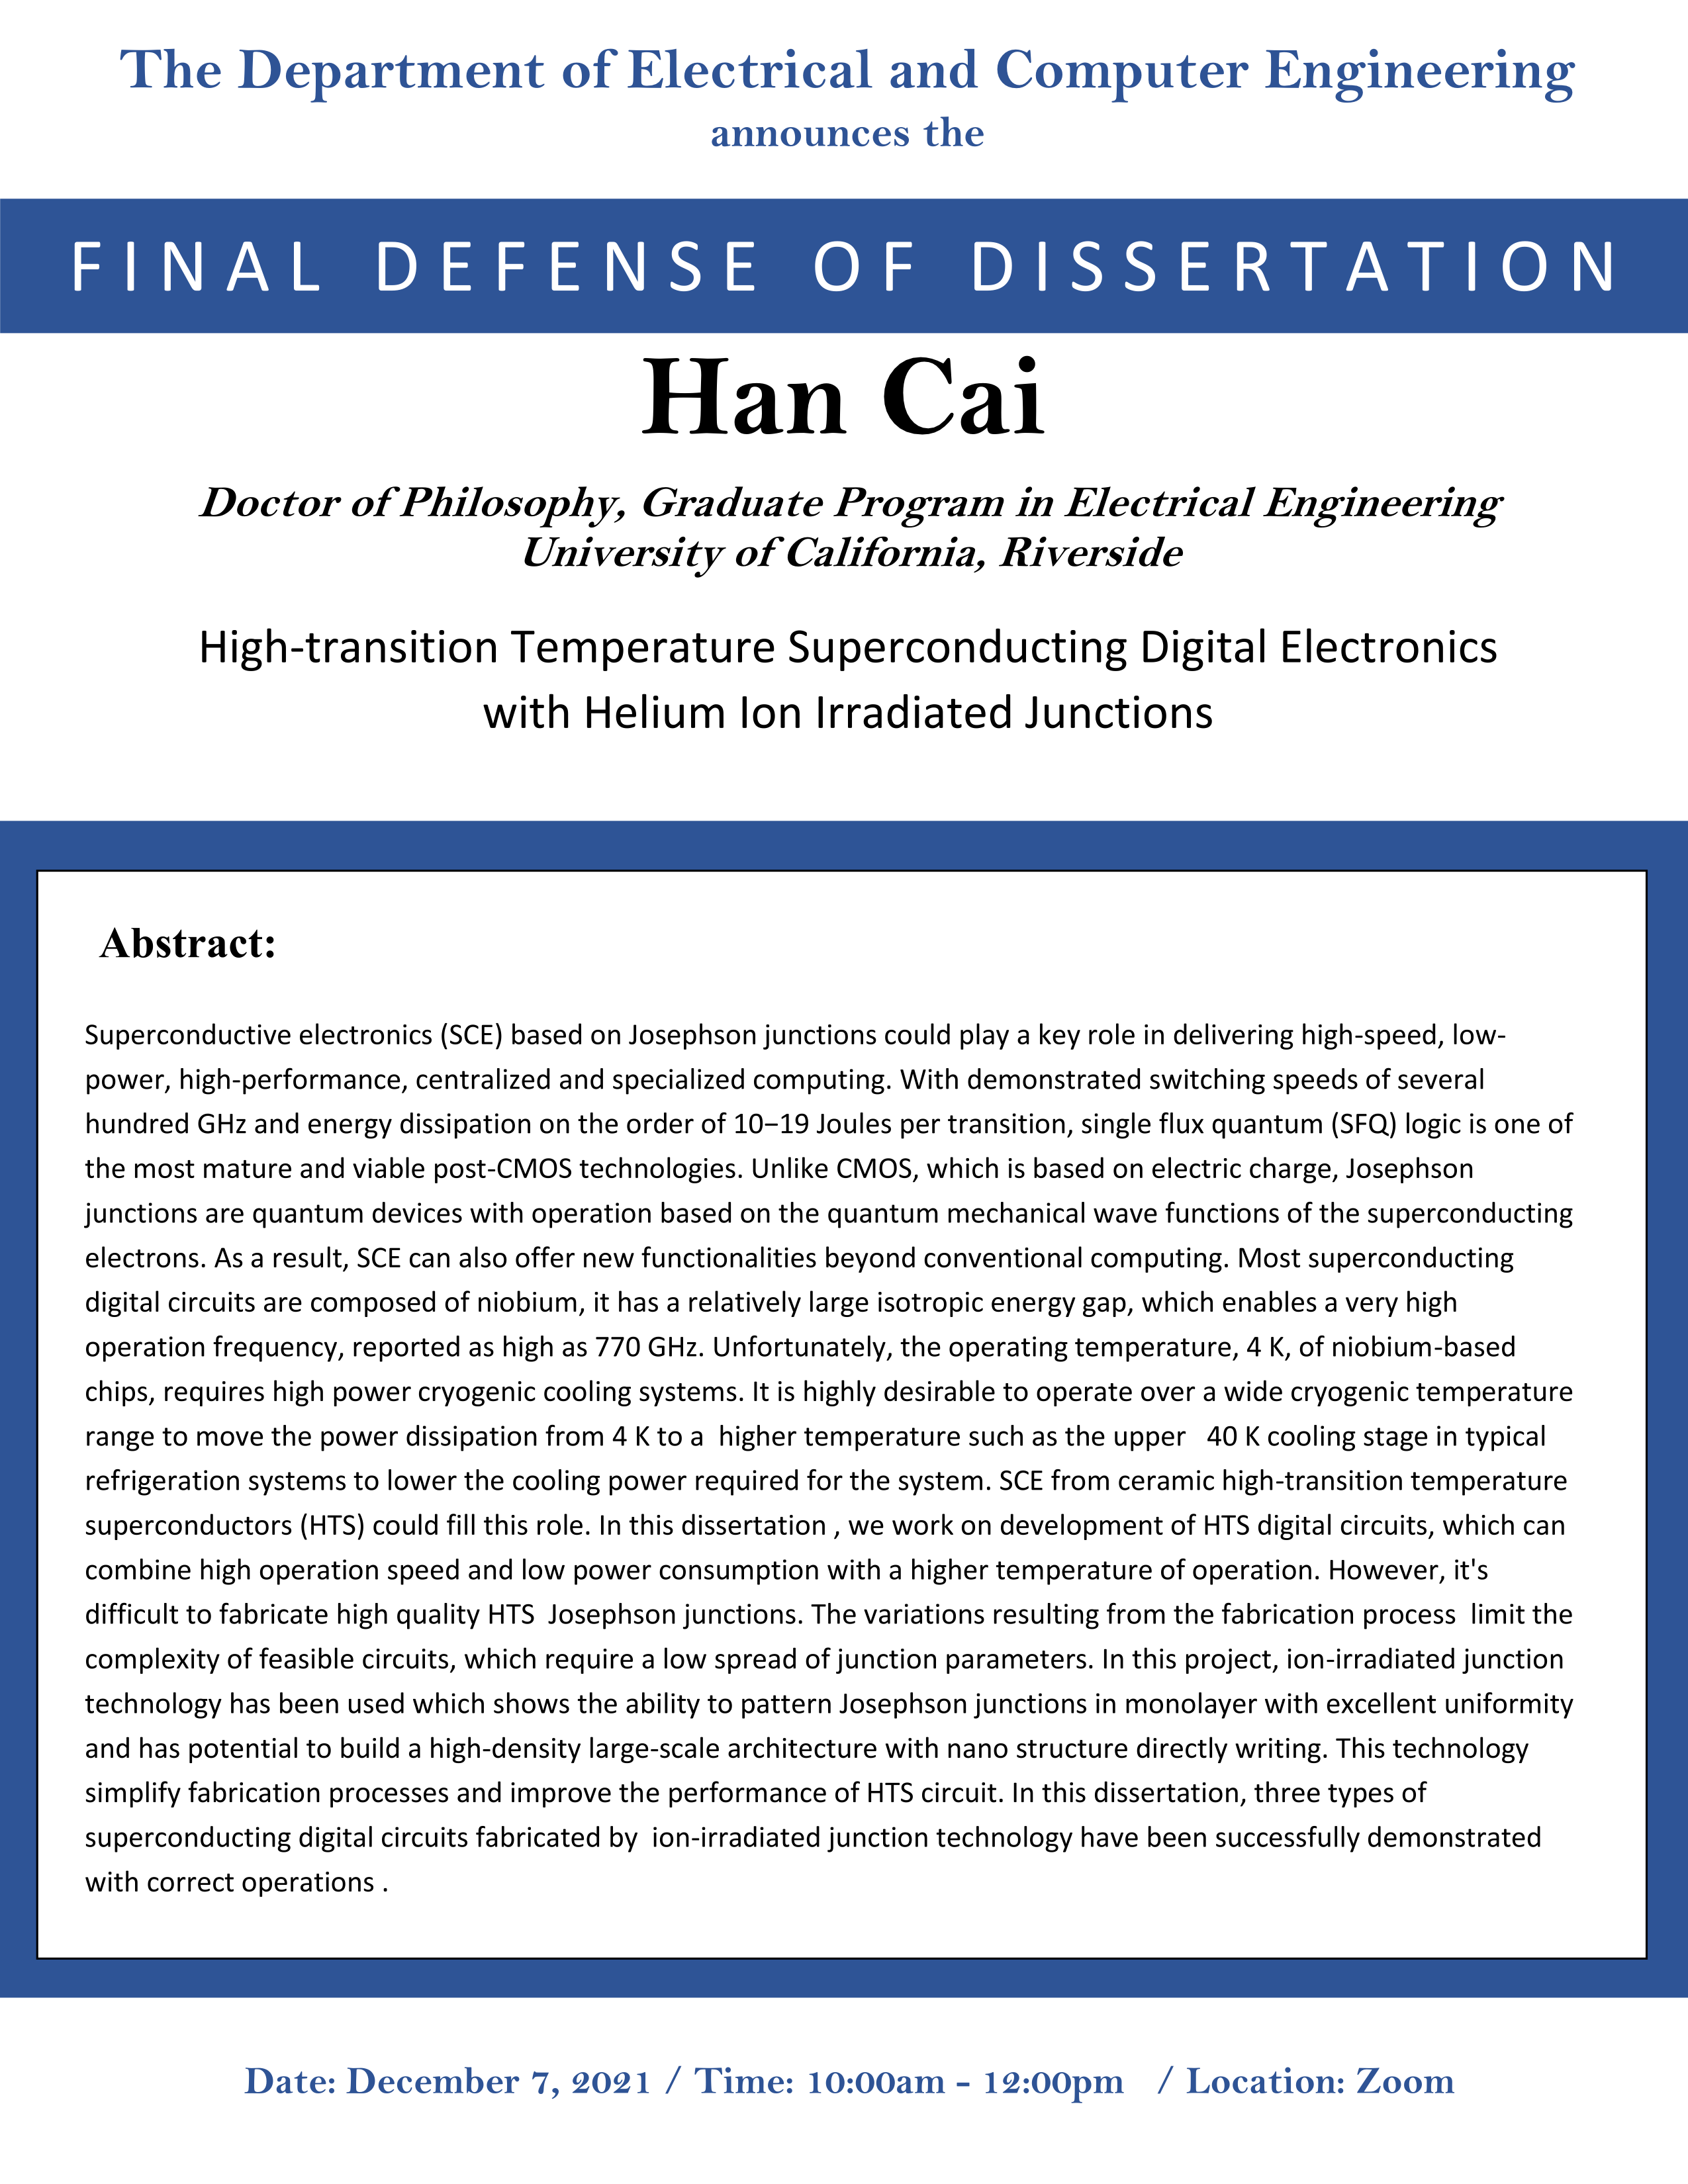 Han Cai Dissertation